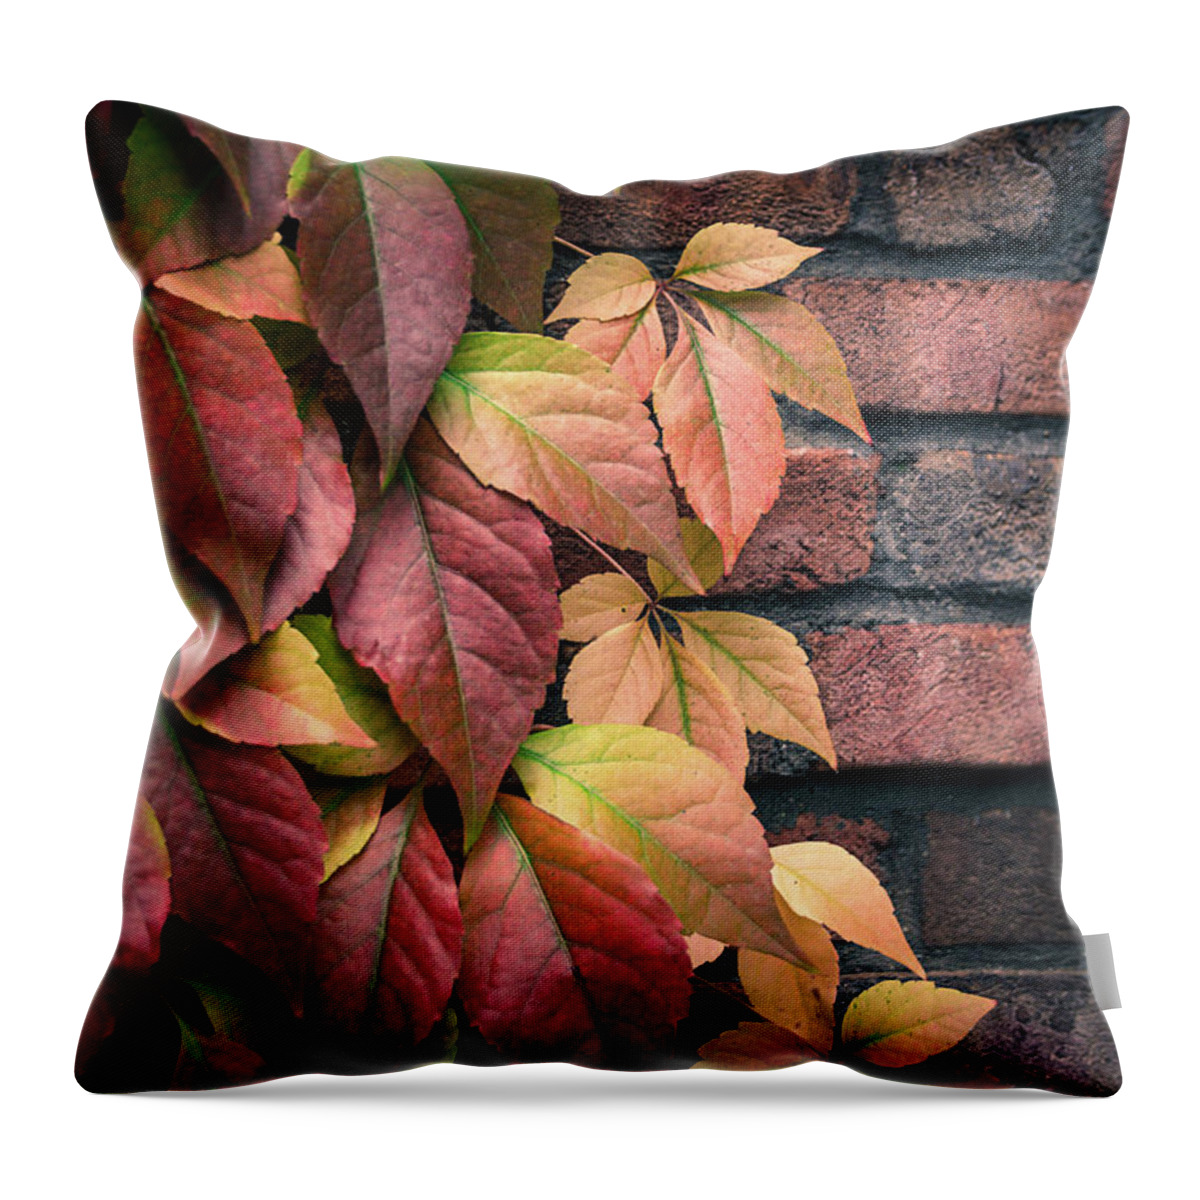 Autumn Throw Pillow featuring the photograph Autumn Leaves Against Brick Wall by Julie Palencia